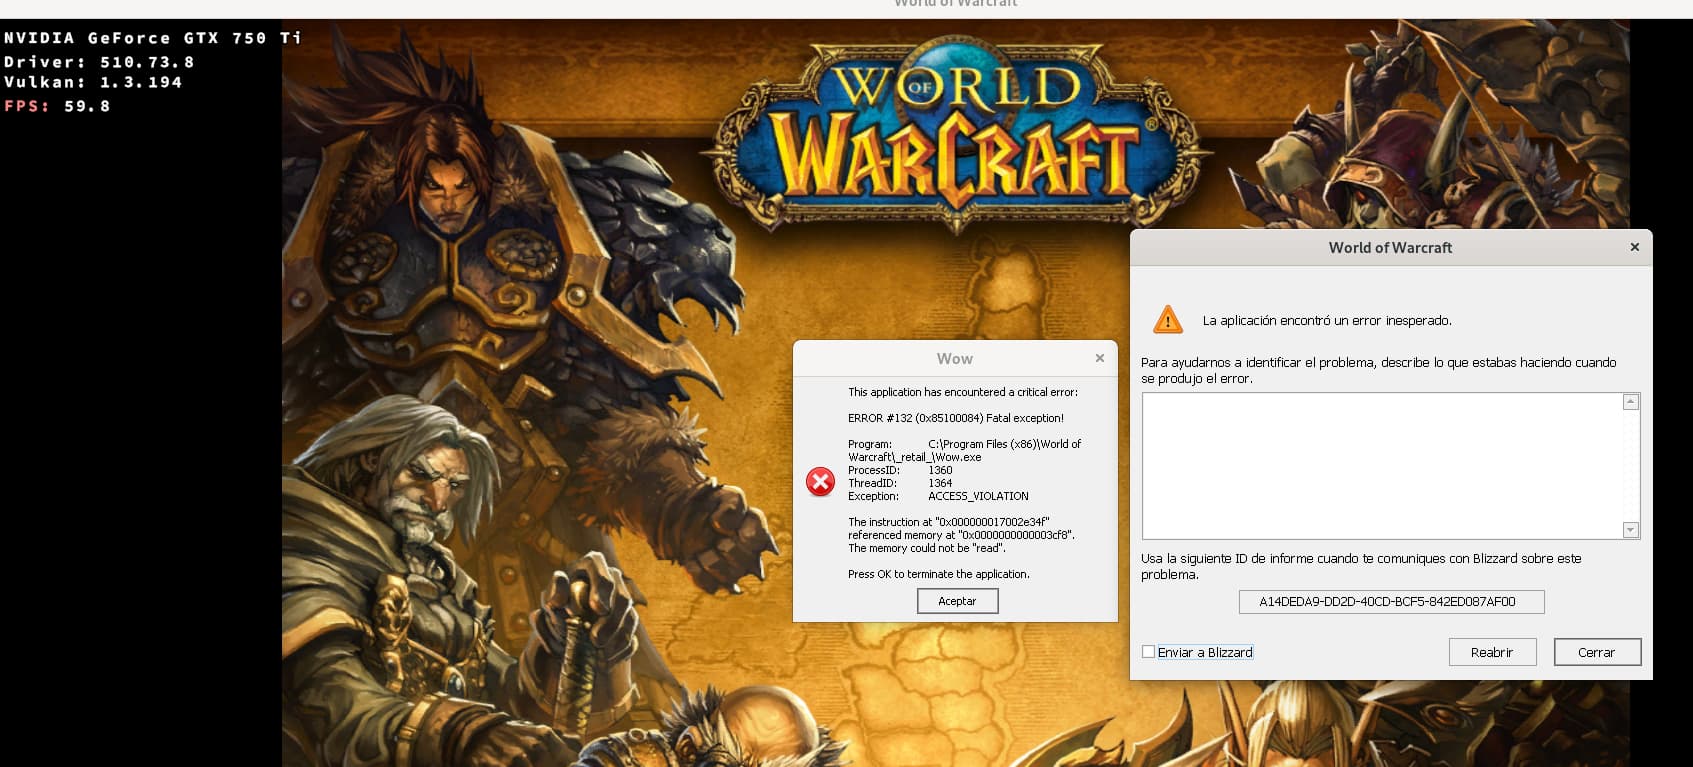 Error then i will be link my account with Battelnet - Warcraft